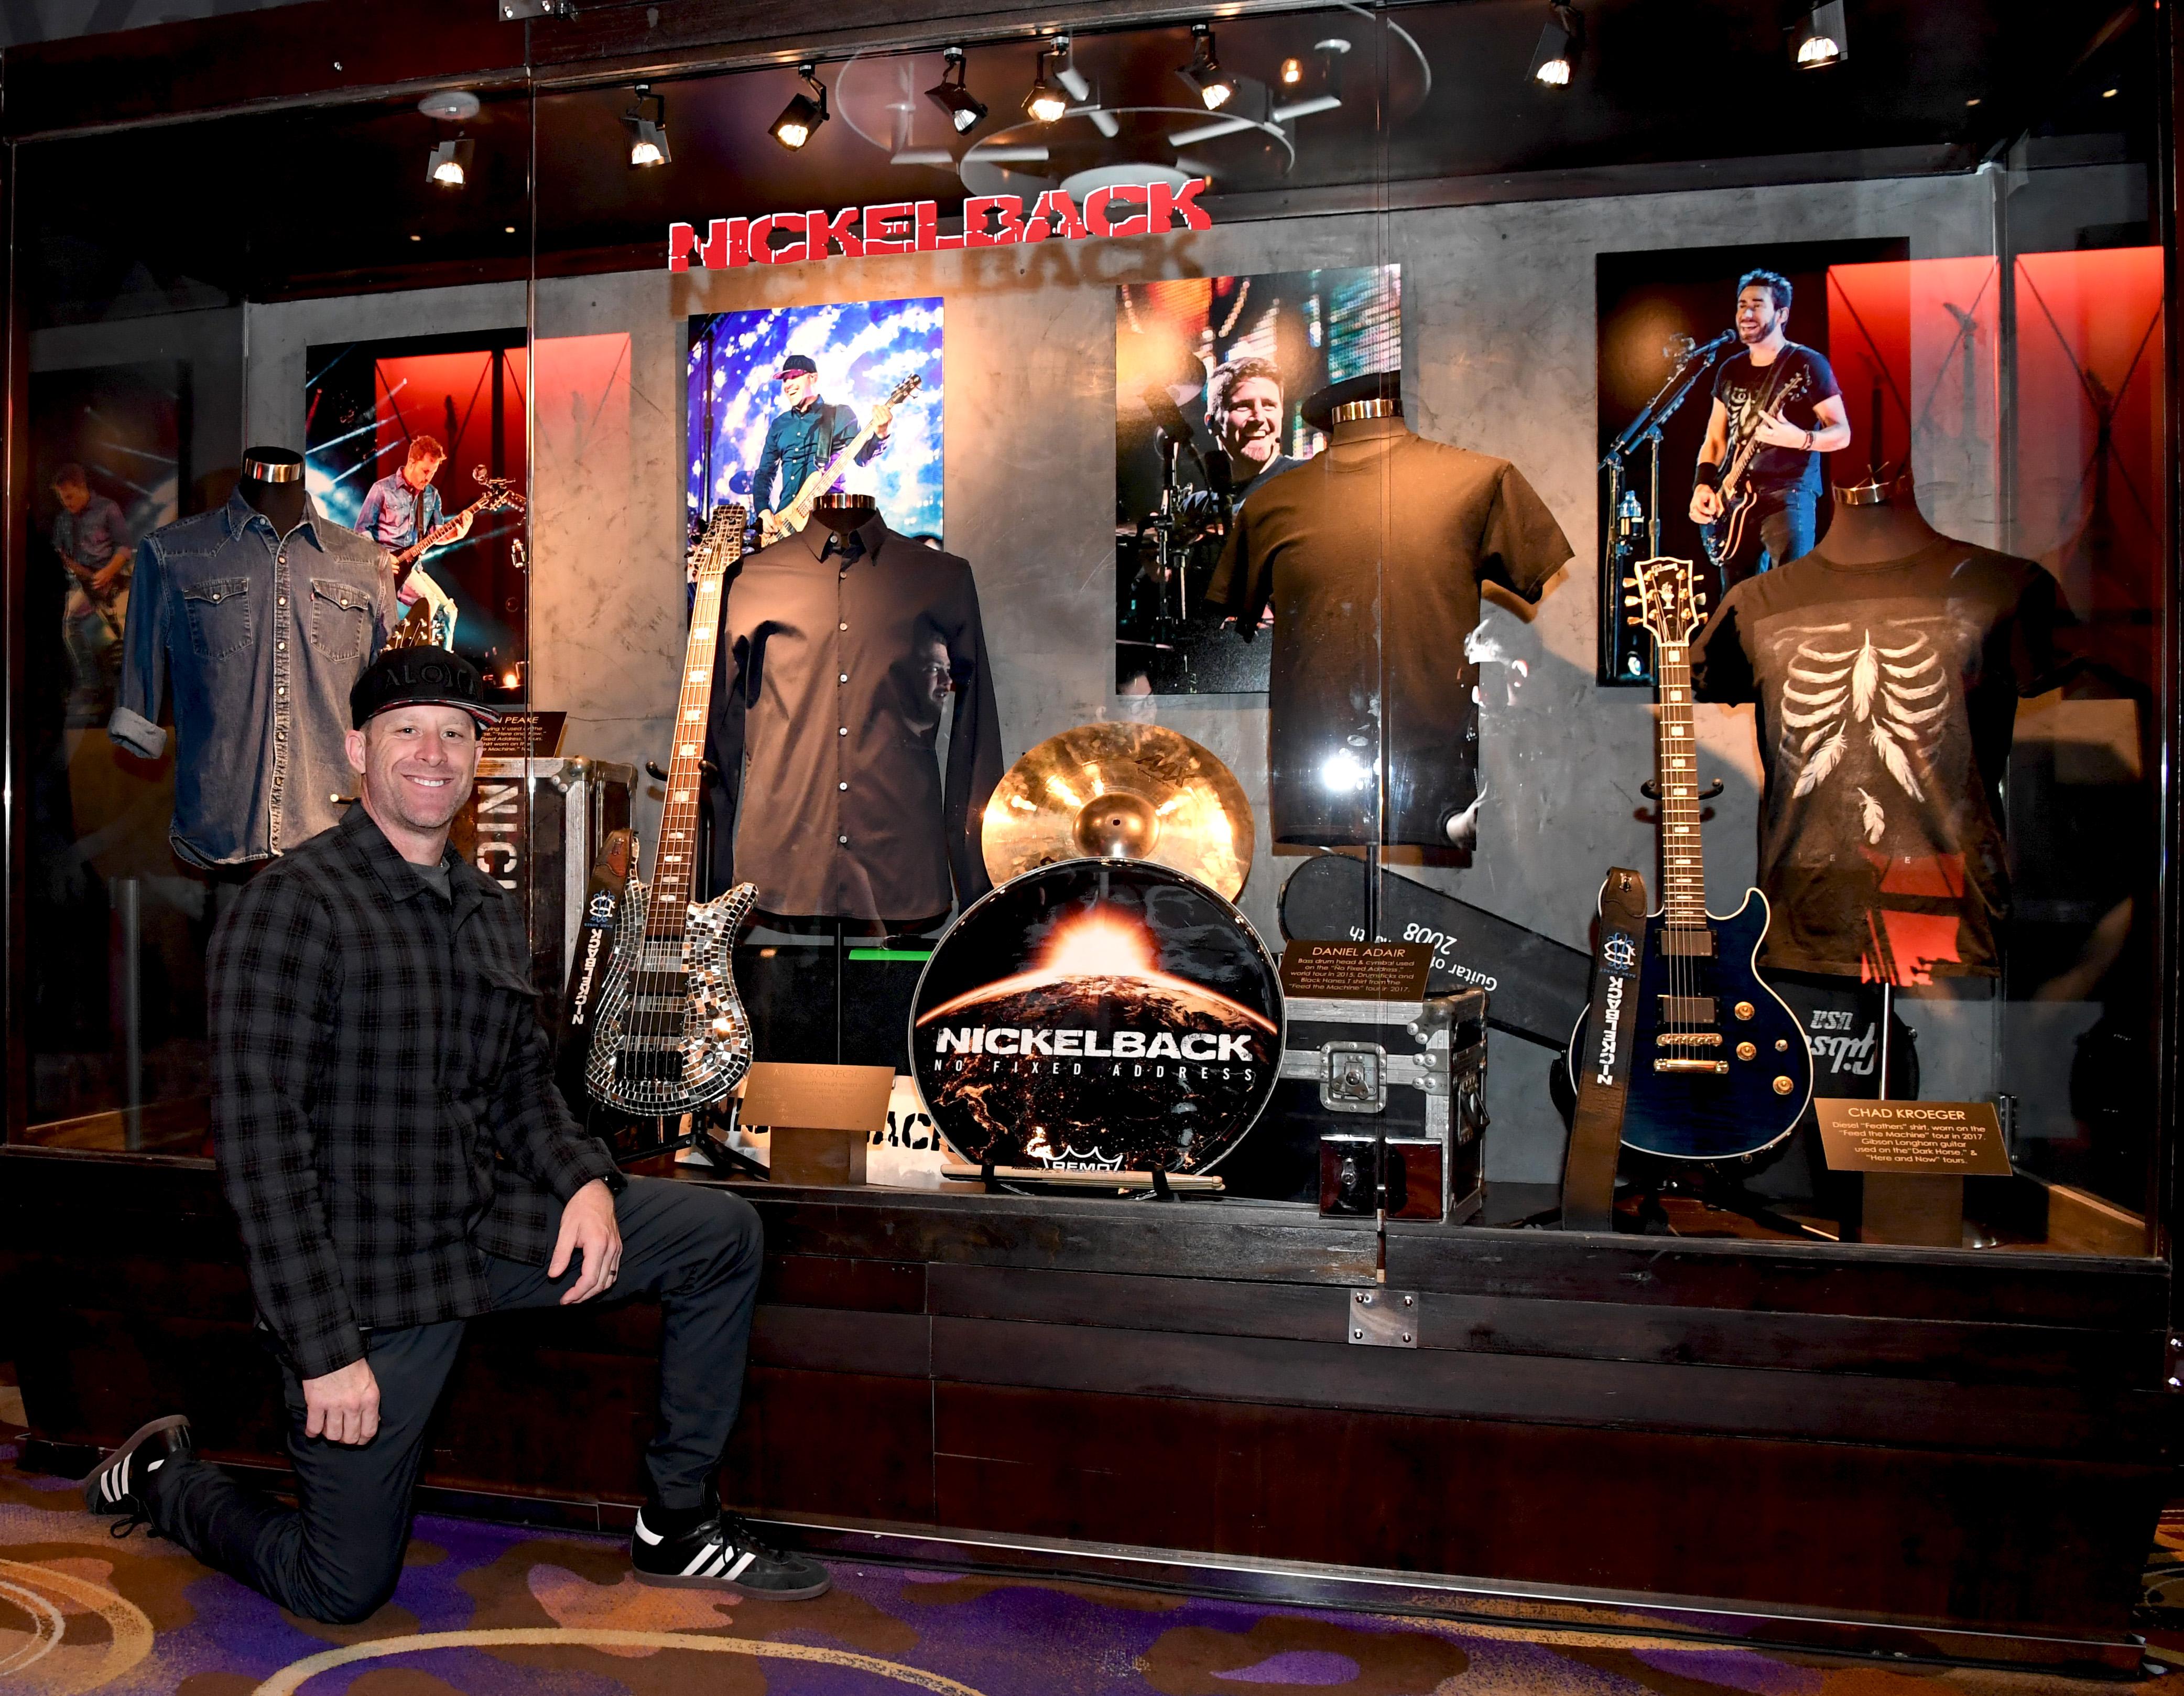 GALLERY Nickelback Memorabilia Case at Hard Rock Hotel & Casino in